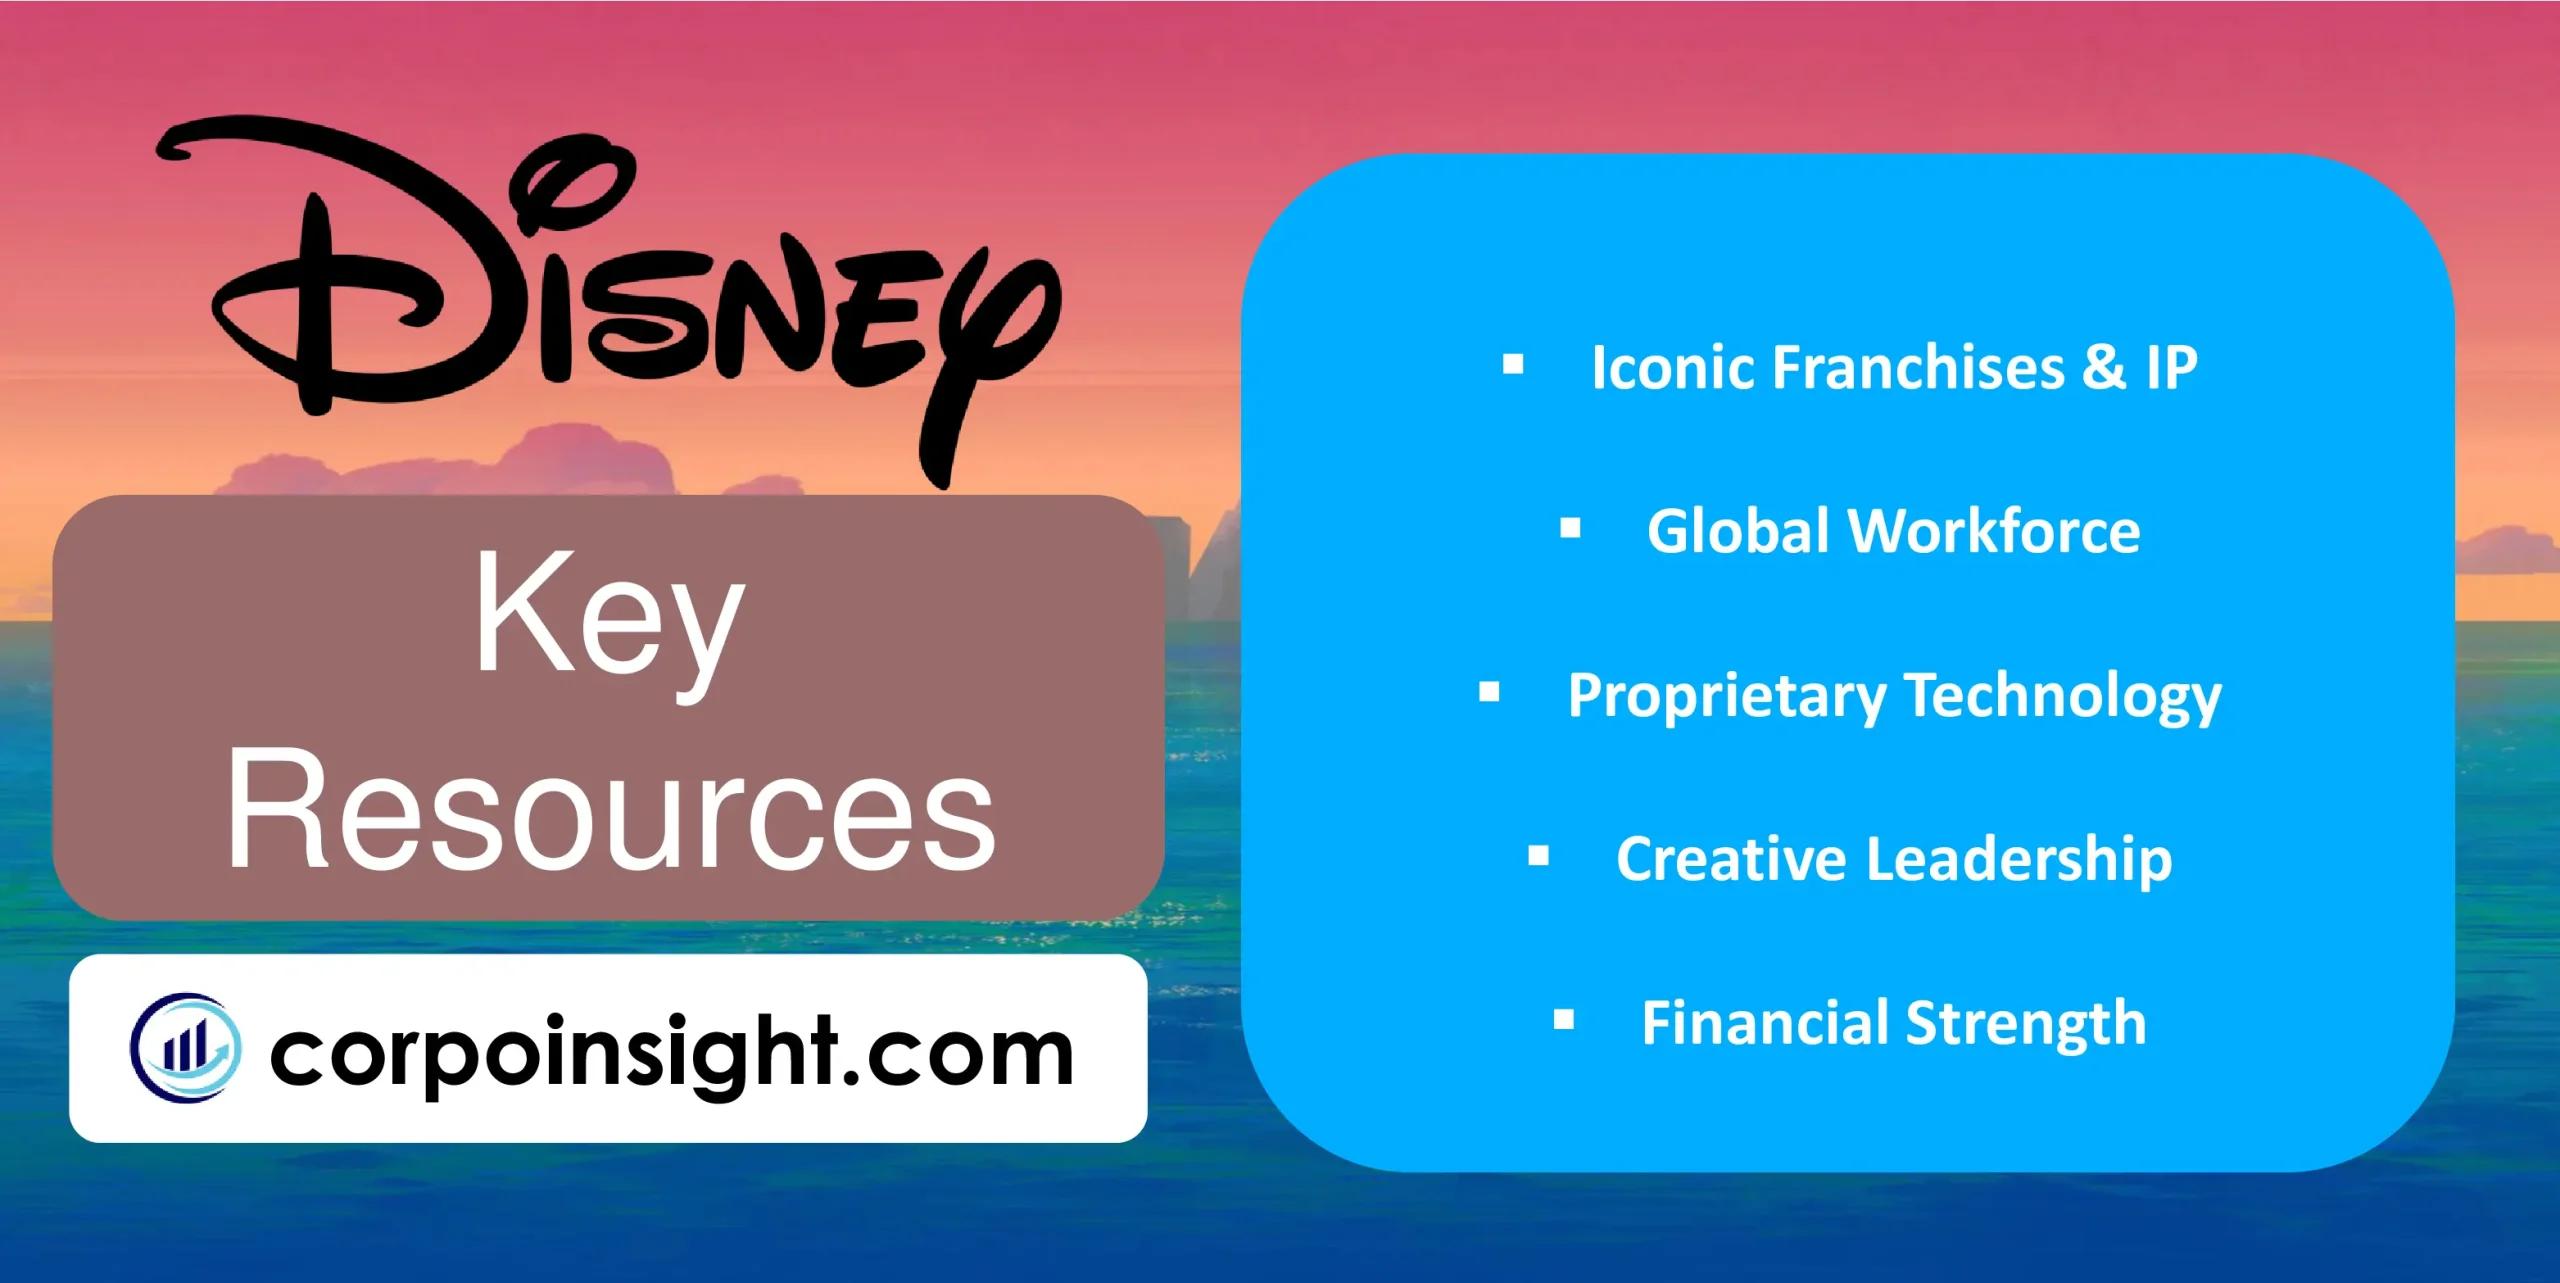 Key Resources of Disney